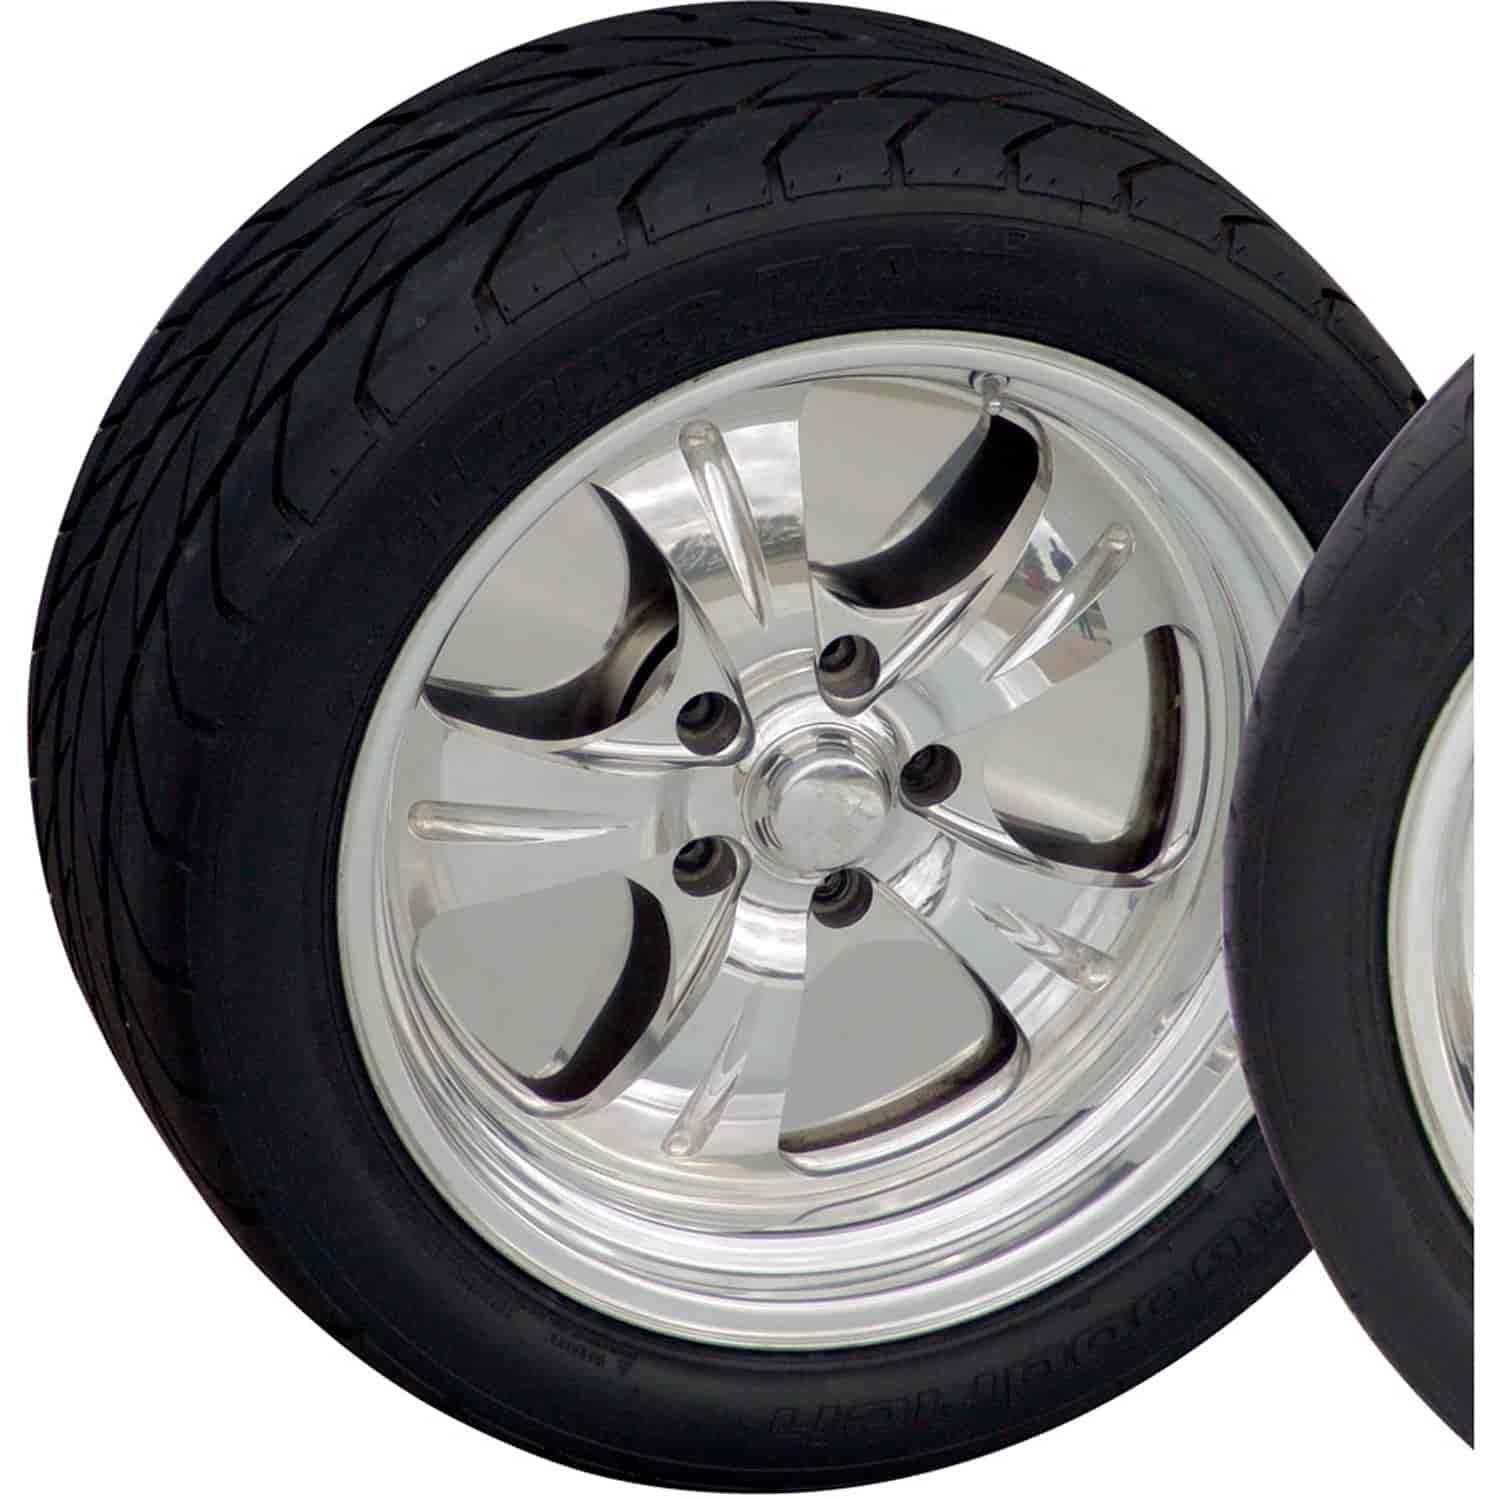 Wheelplate - Brake Dust Shield Fits 15 in. Wheel Diameter